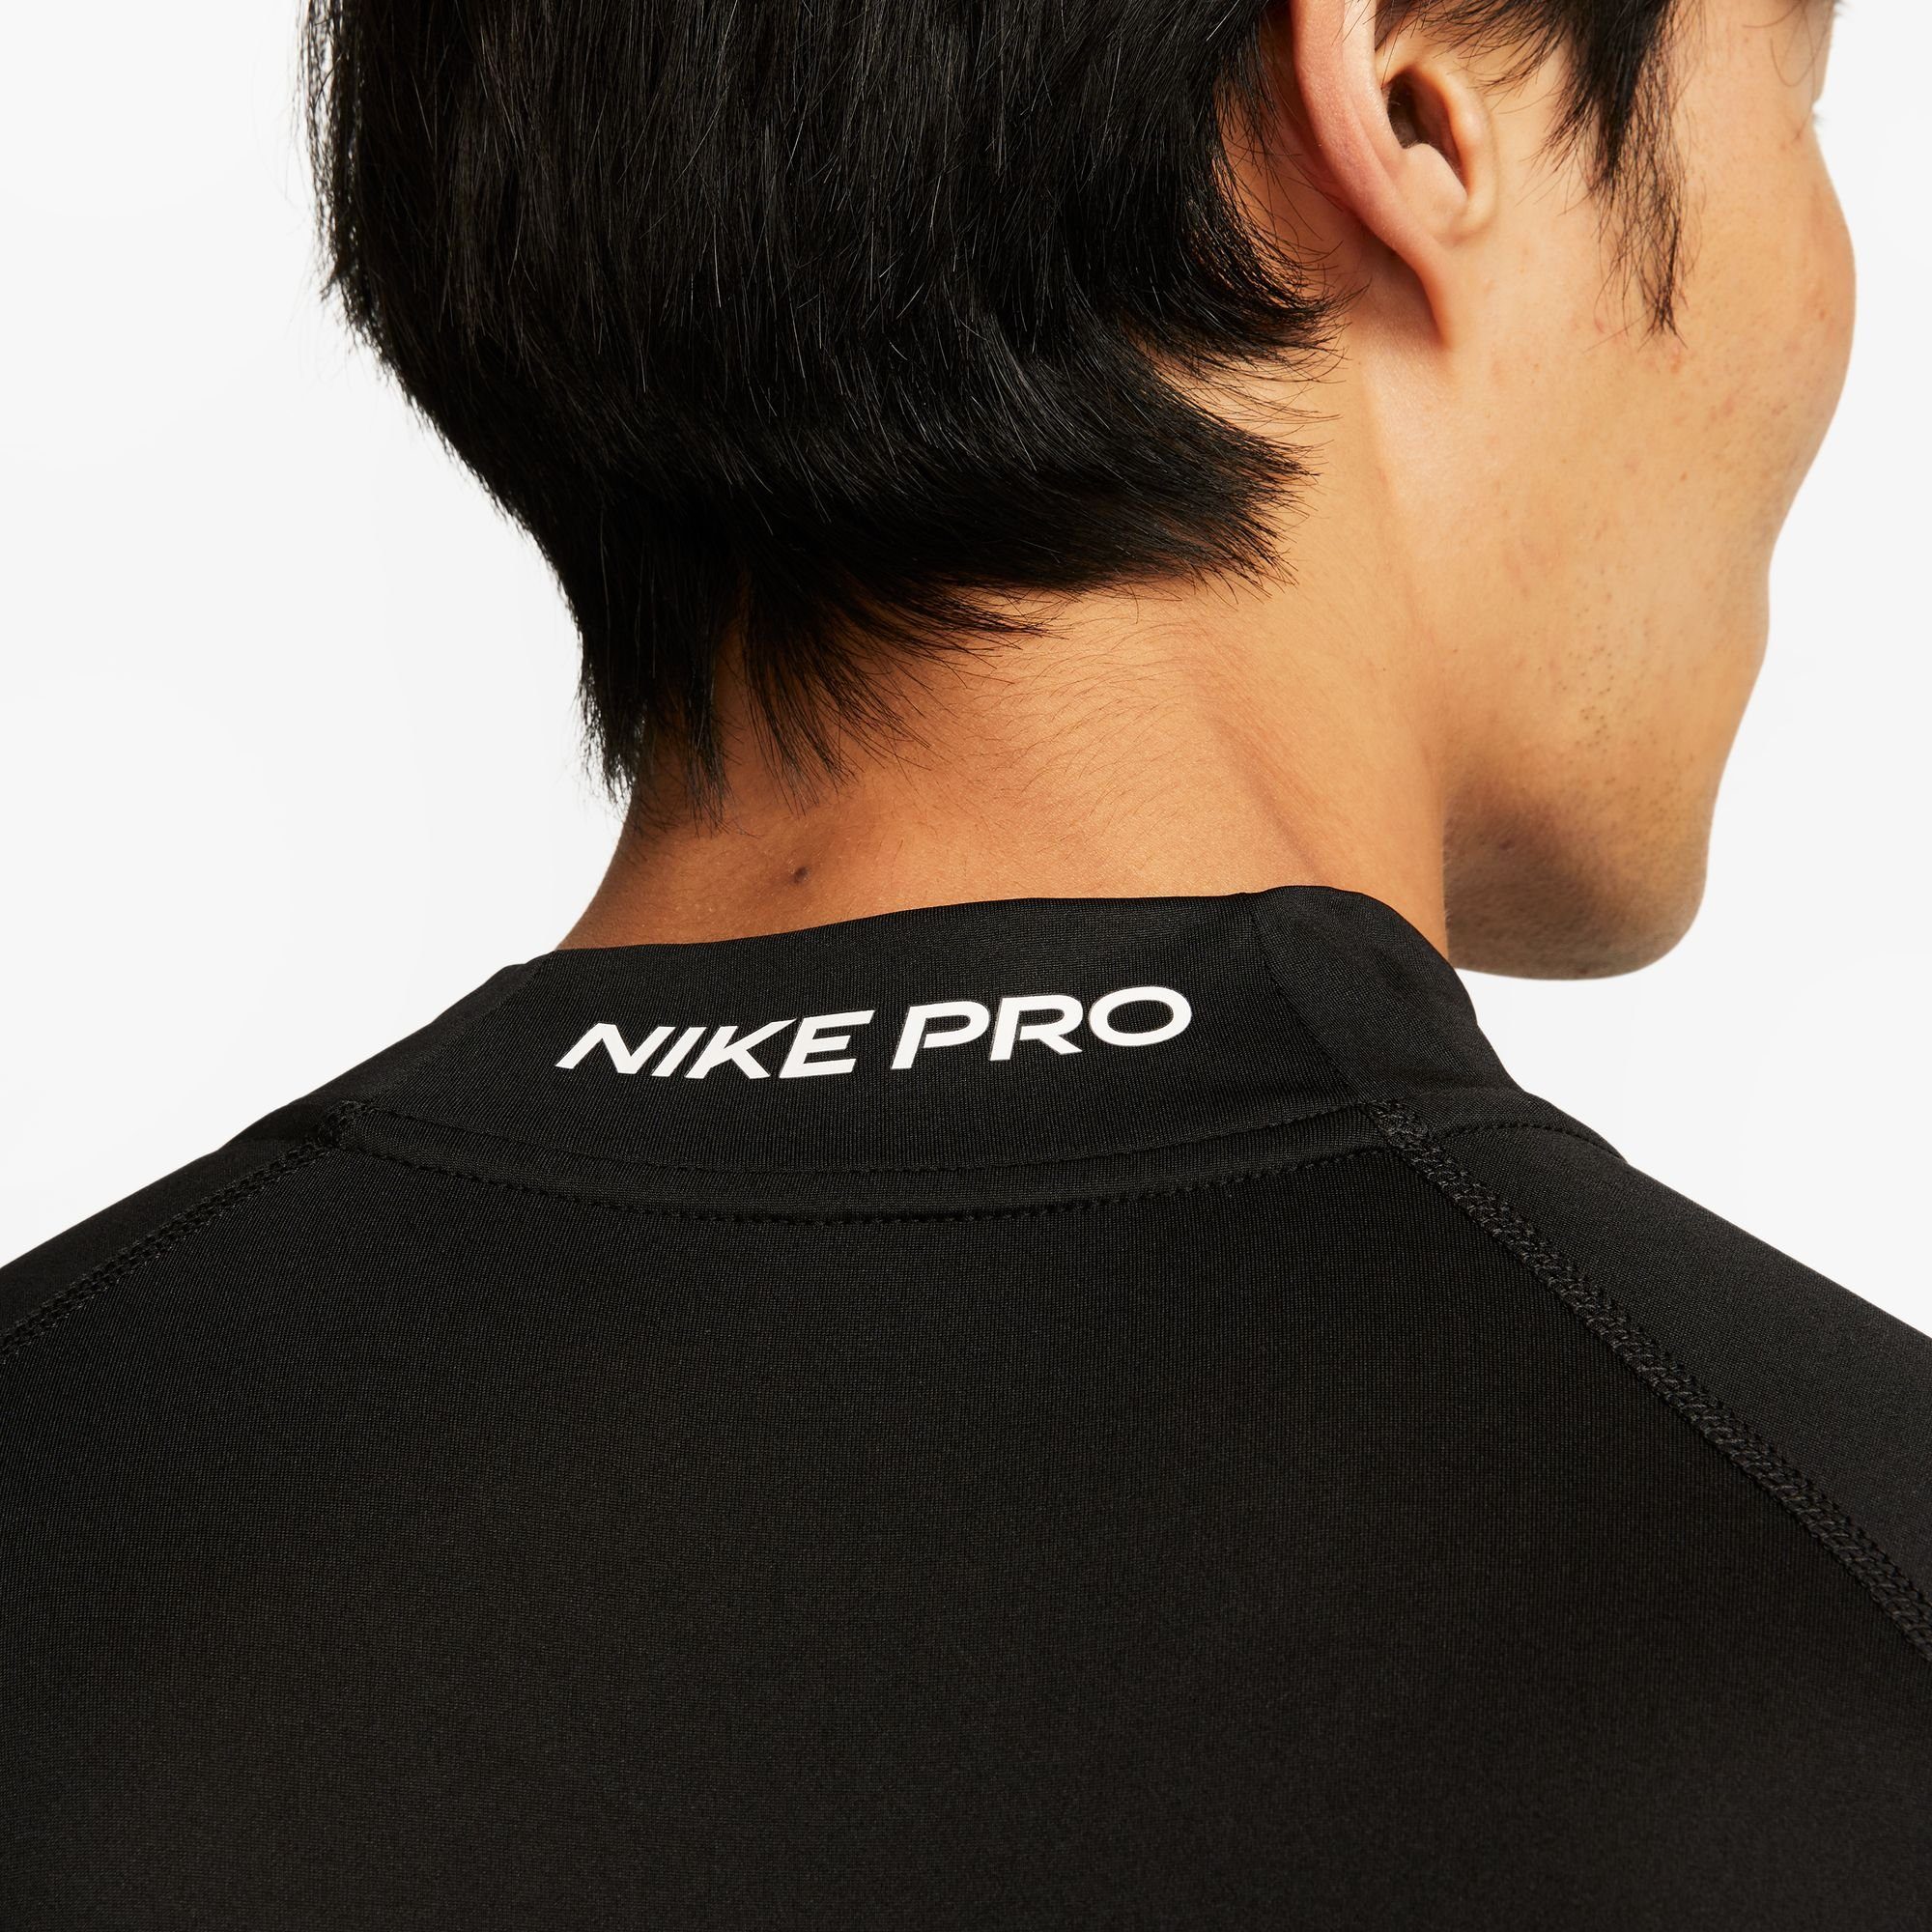 DRI-FIT TOP Nike PRO Trainingsshirt MOCK-NECK TIGHT-FITTING LONG-SLEEVE MEN'S